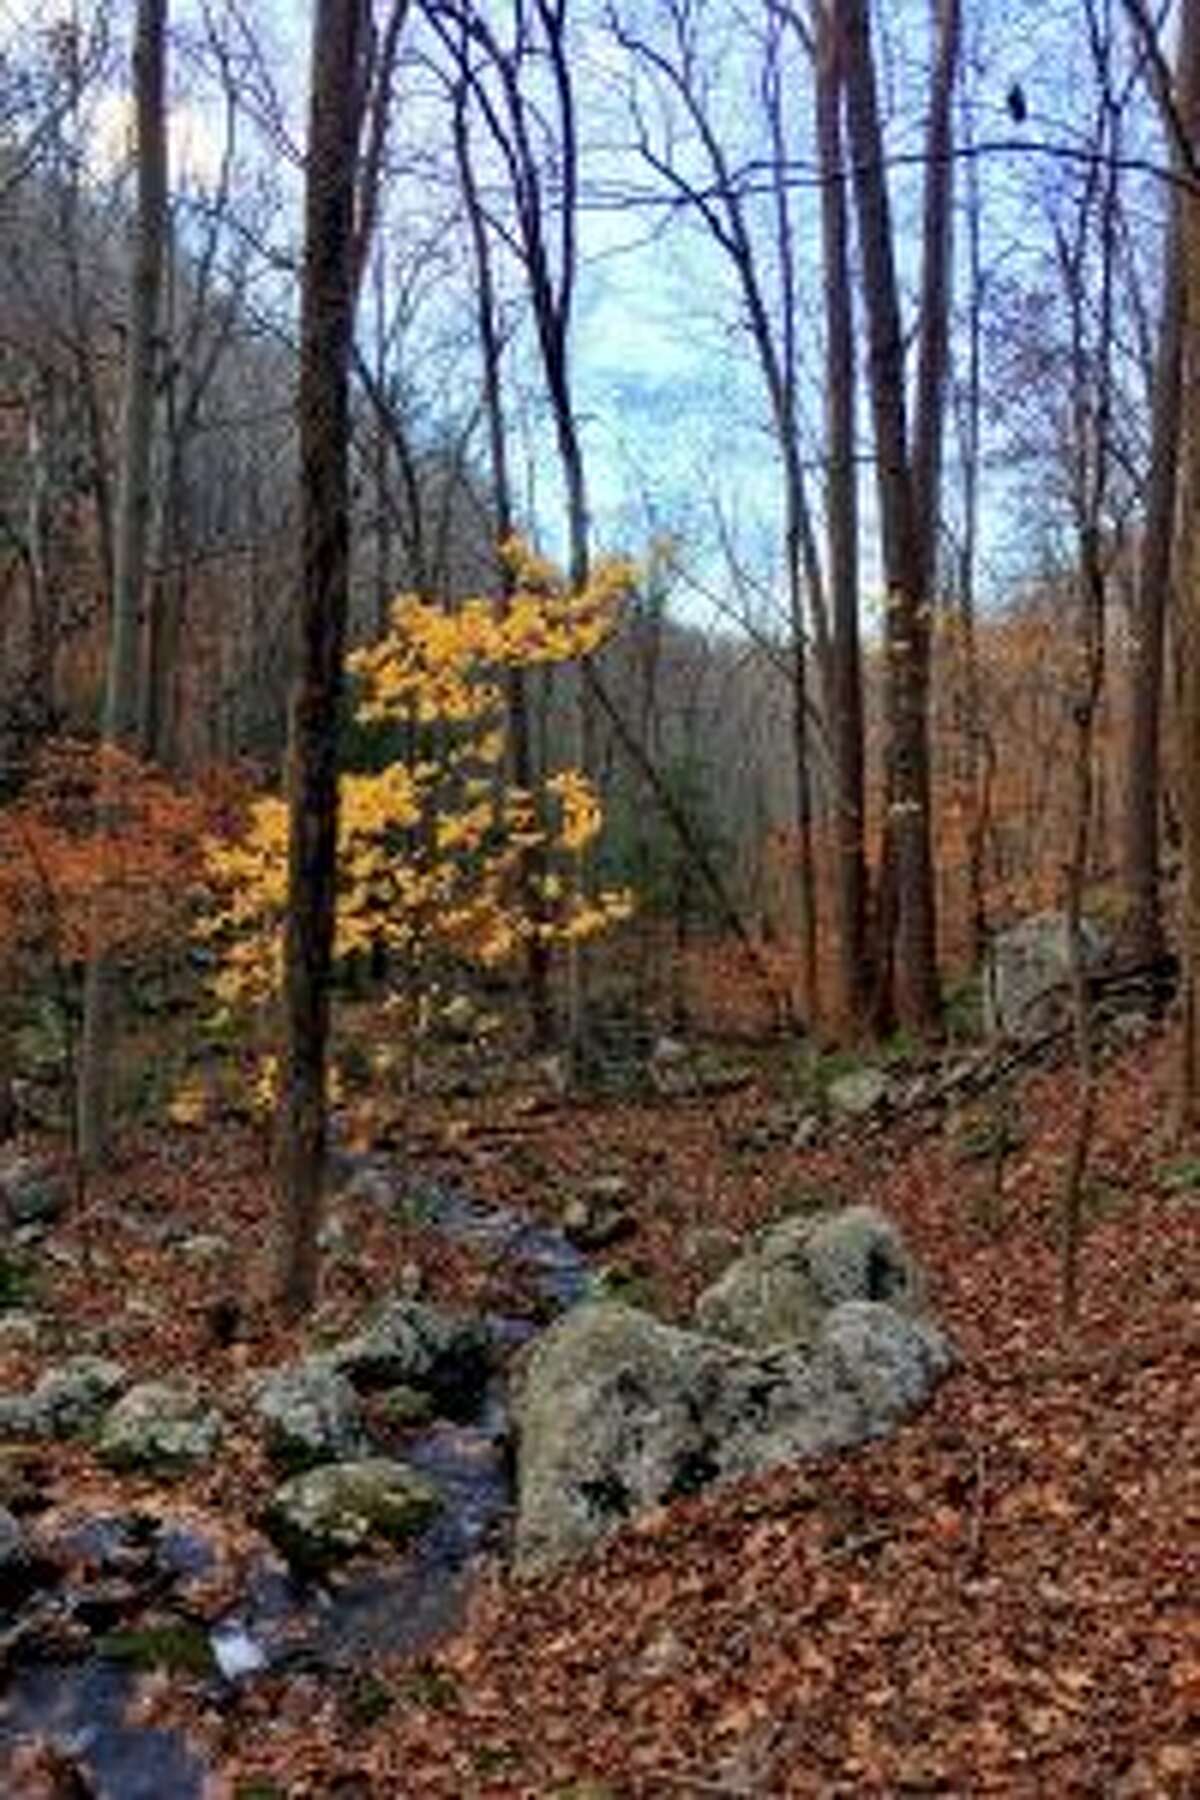 Fall colors in a Hemlock Hills ravine. — Rob McWilliams photo